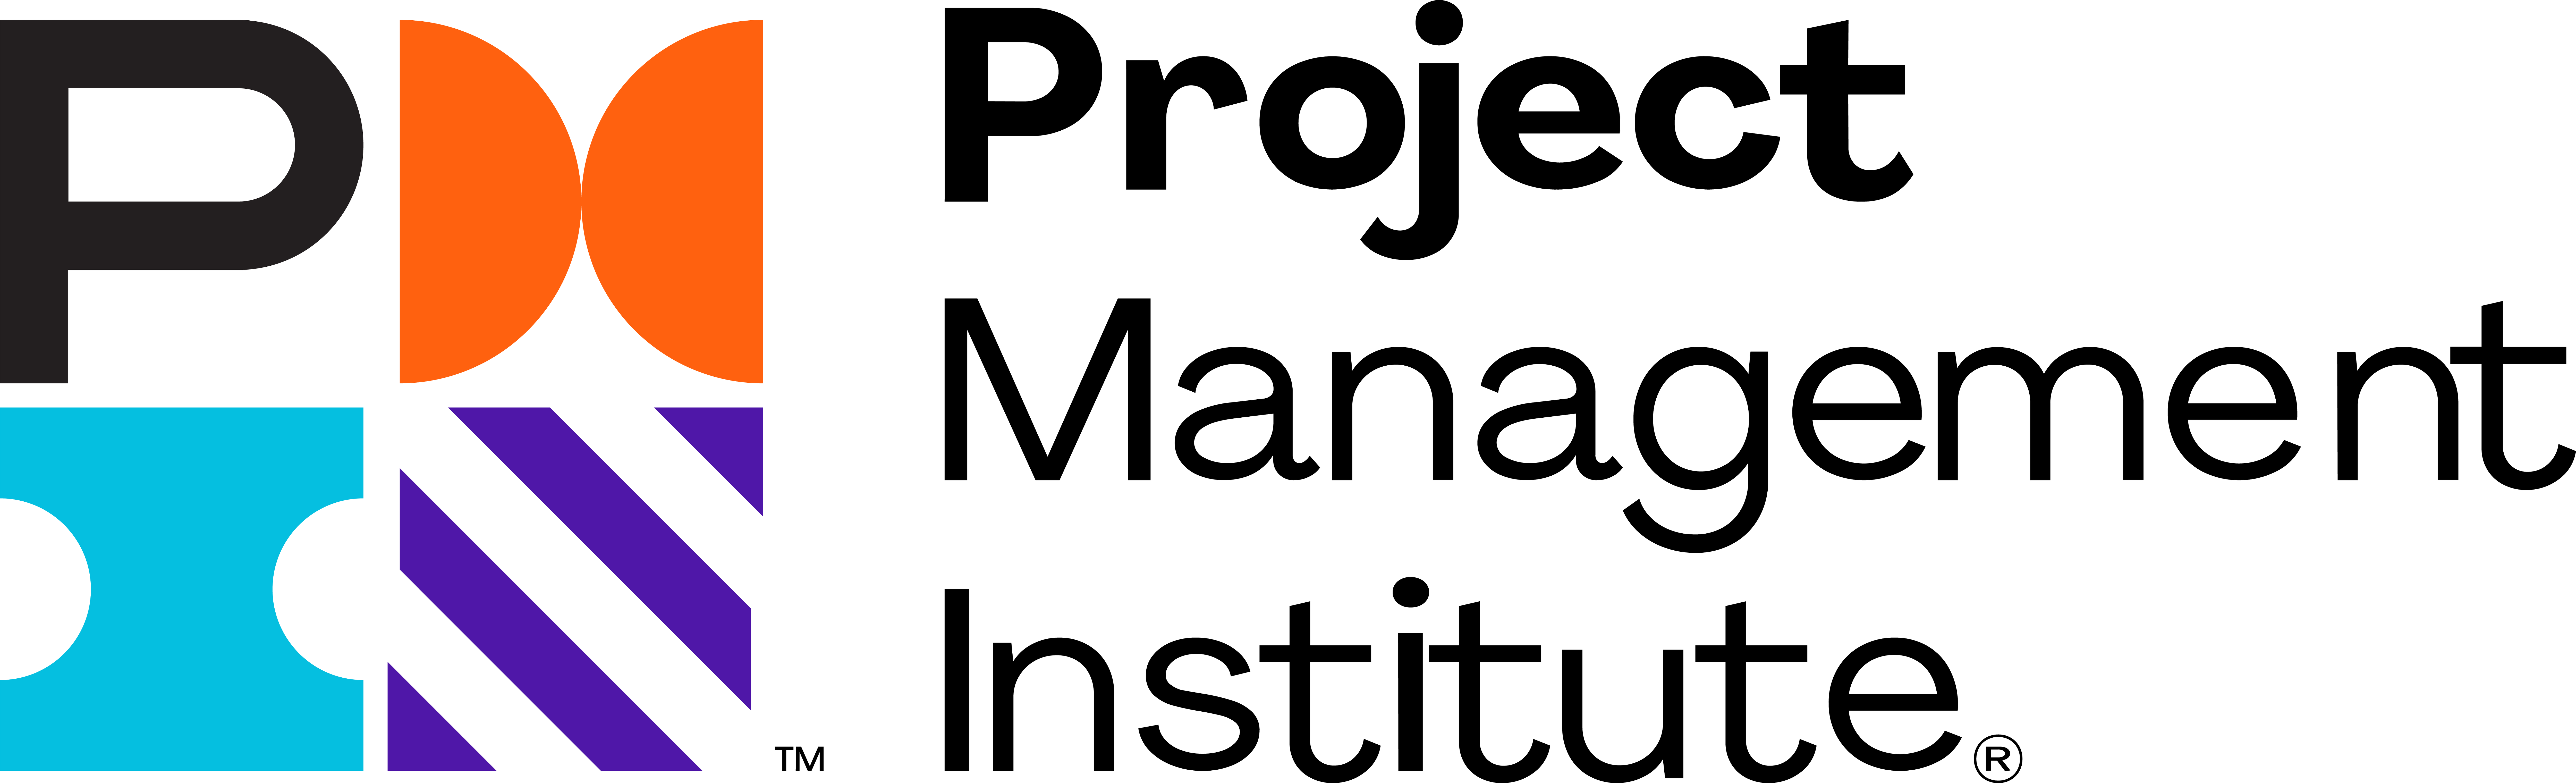 Project Management Institute logo